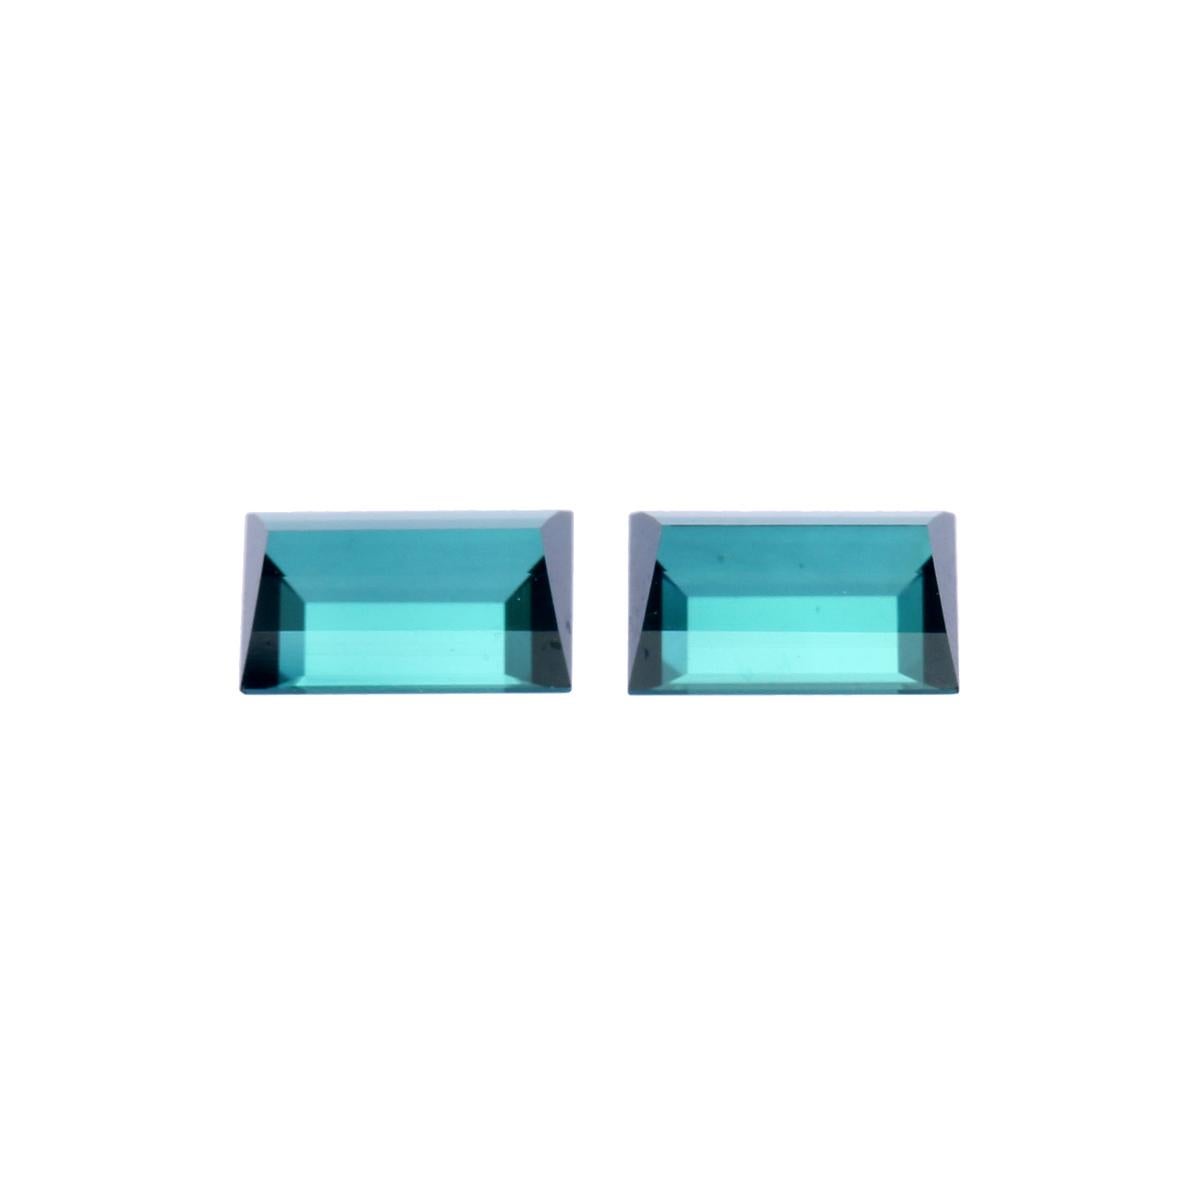 Pair of Tourmaline Indicolate
Weight: 1.02 & 1.00 ct
Dimension: 7.05 x 4.62 x 3.64 mm
                   7.02 x 4.61 x 3.58 mm
Greenish blue rectangular cut